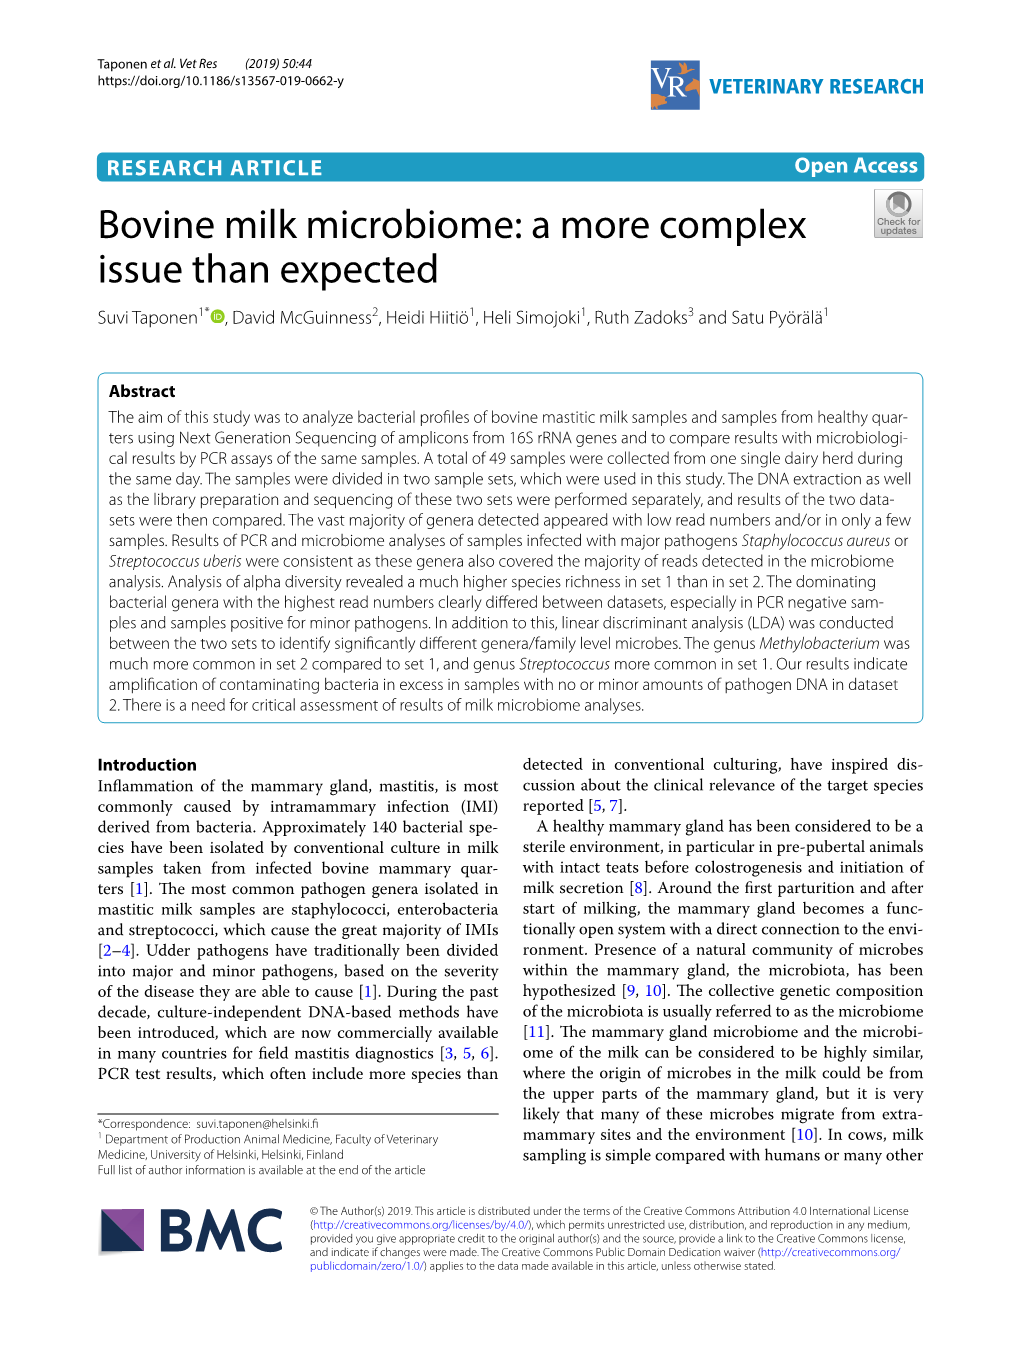 Bovine Milk Microbiome: a More Complex Issue Than Expected Suvi Taponen1* , David Mcguinness2, Heidi Hiitiö1, Heli Simojoki1, Ruth Zadoks3 and Satu Pyörälä1